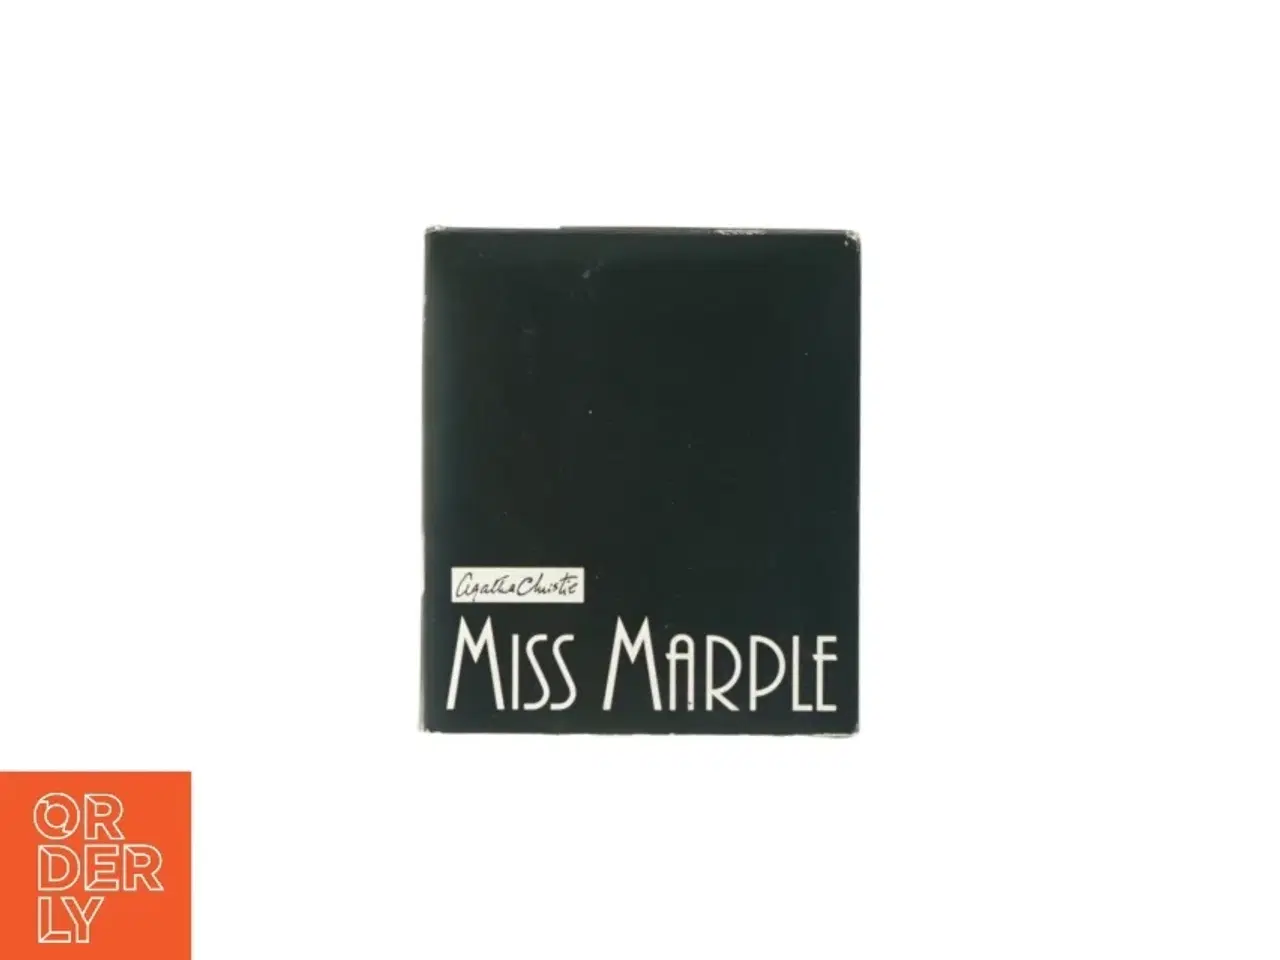 Billede 2 - Miss Marple DVD Boks (DVD) fra BBC (str. 20 x 14 x 12 cm)